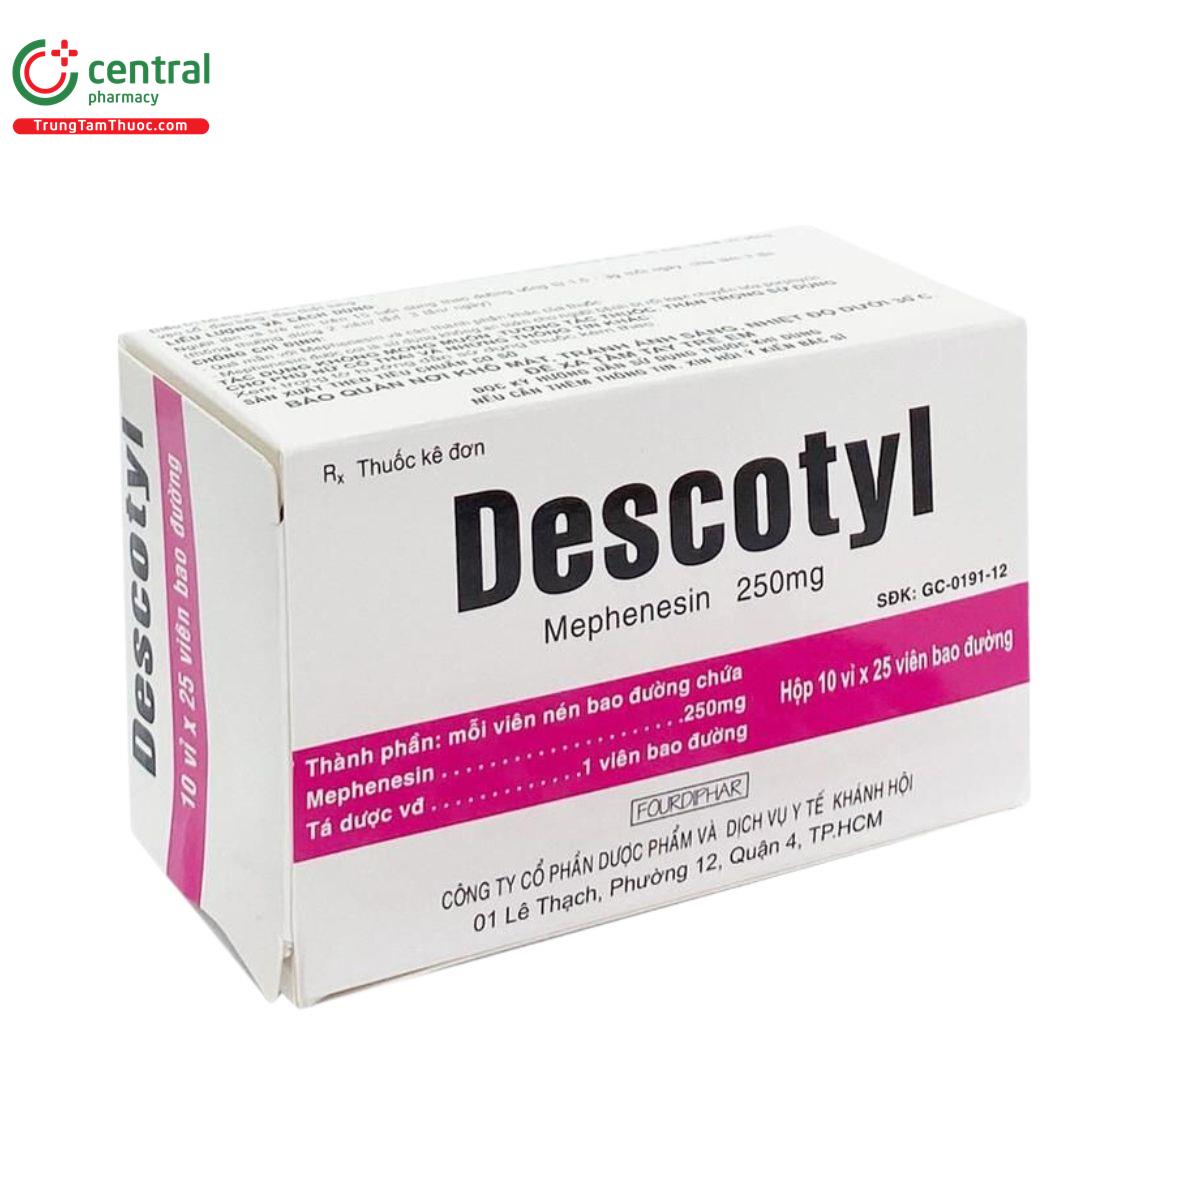 descotyl 250mg 3 C1187